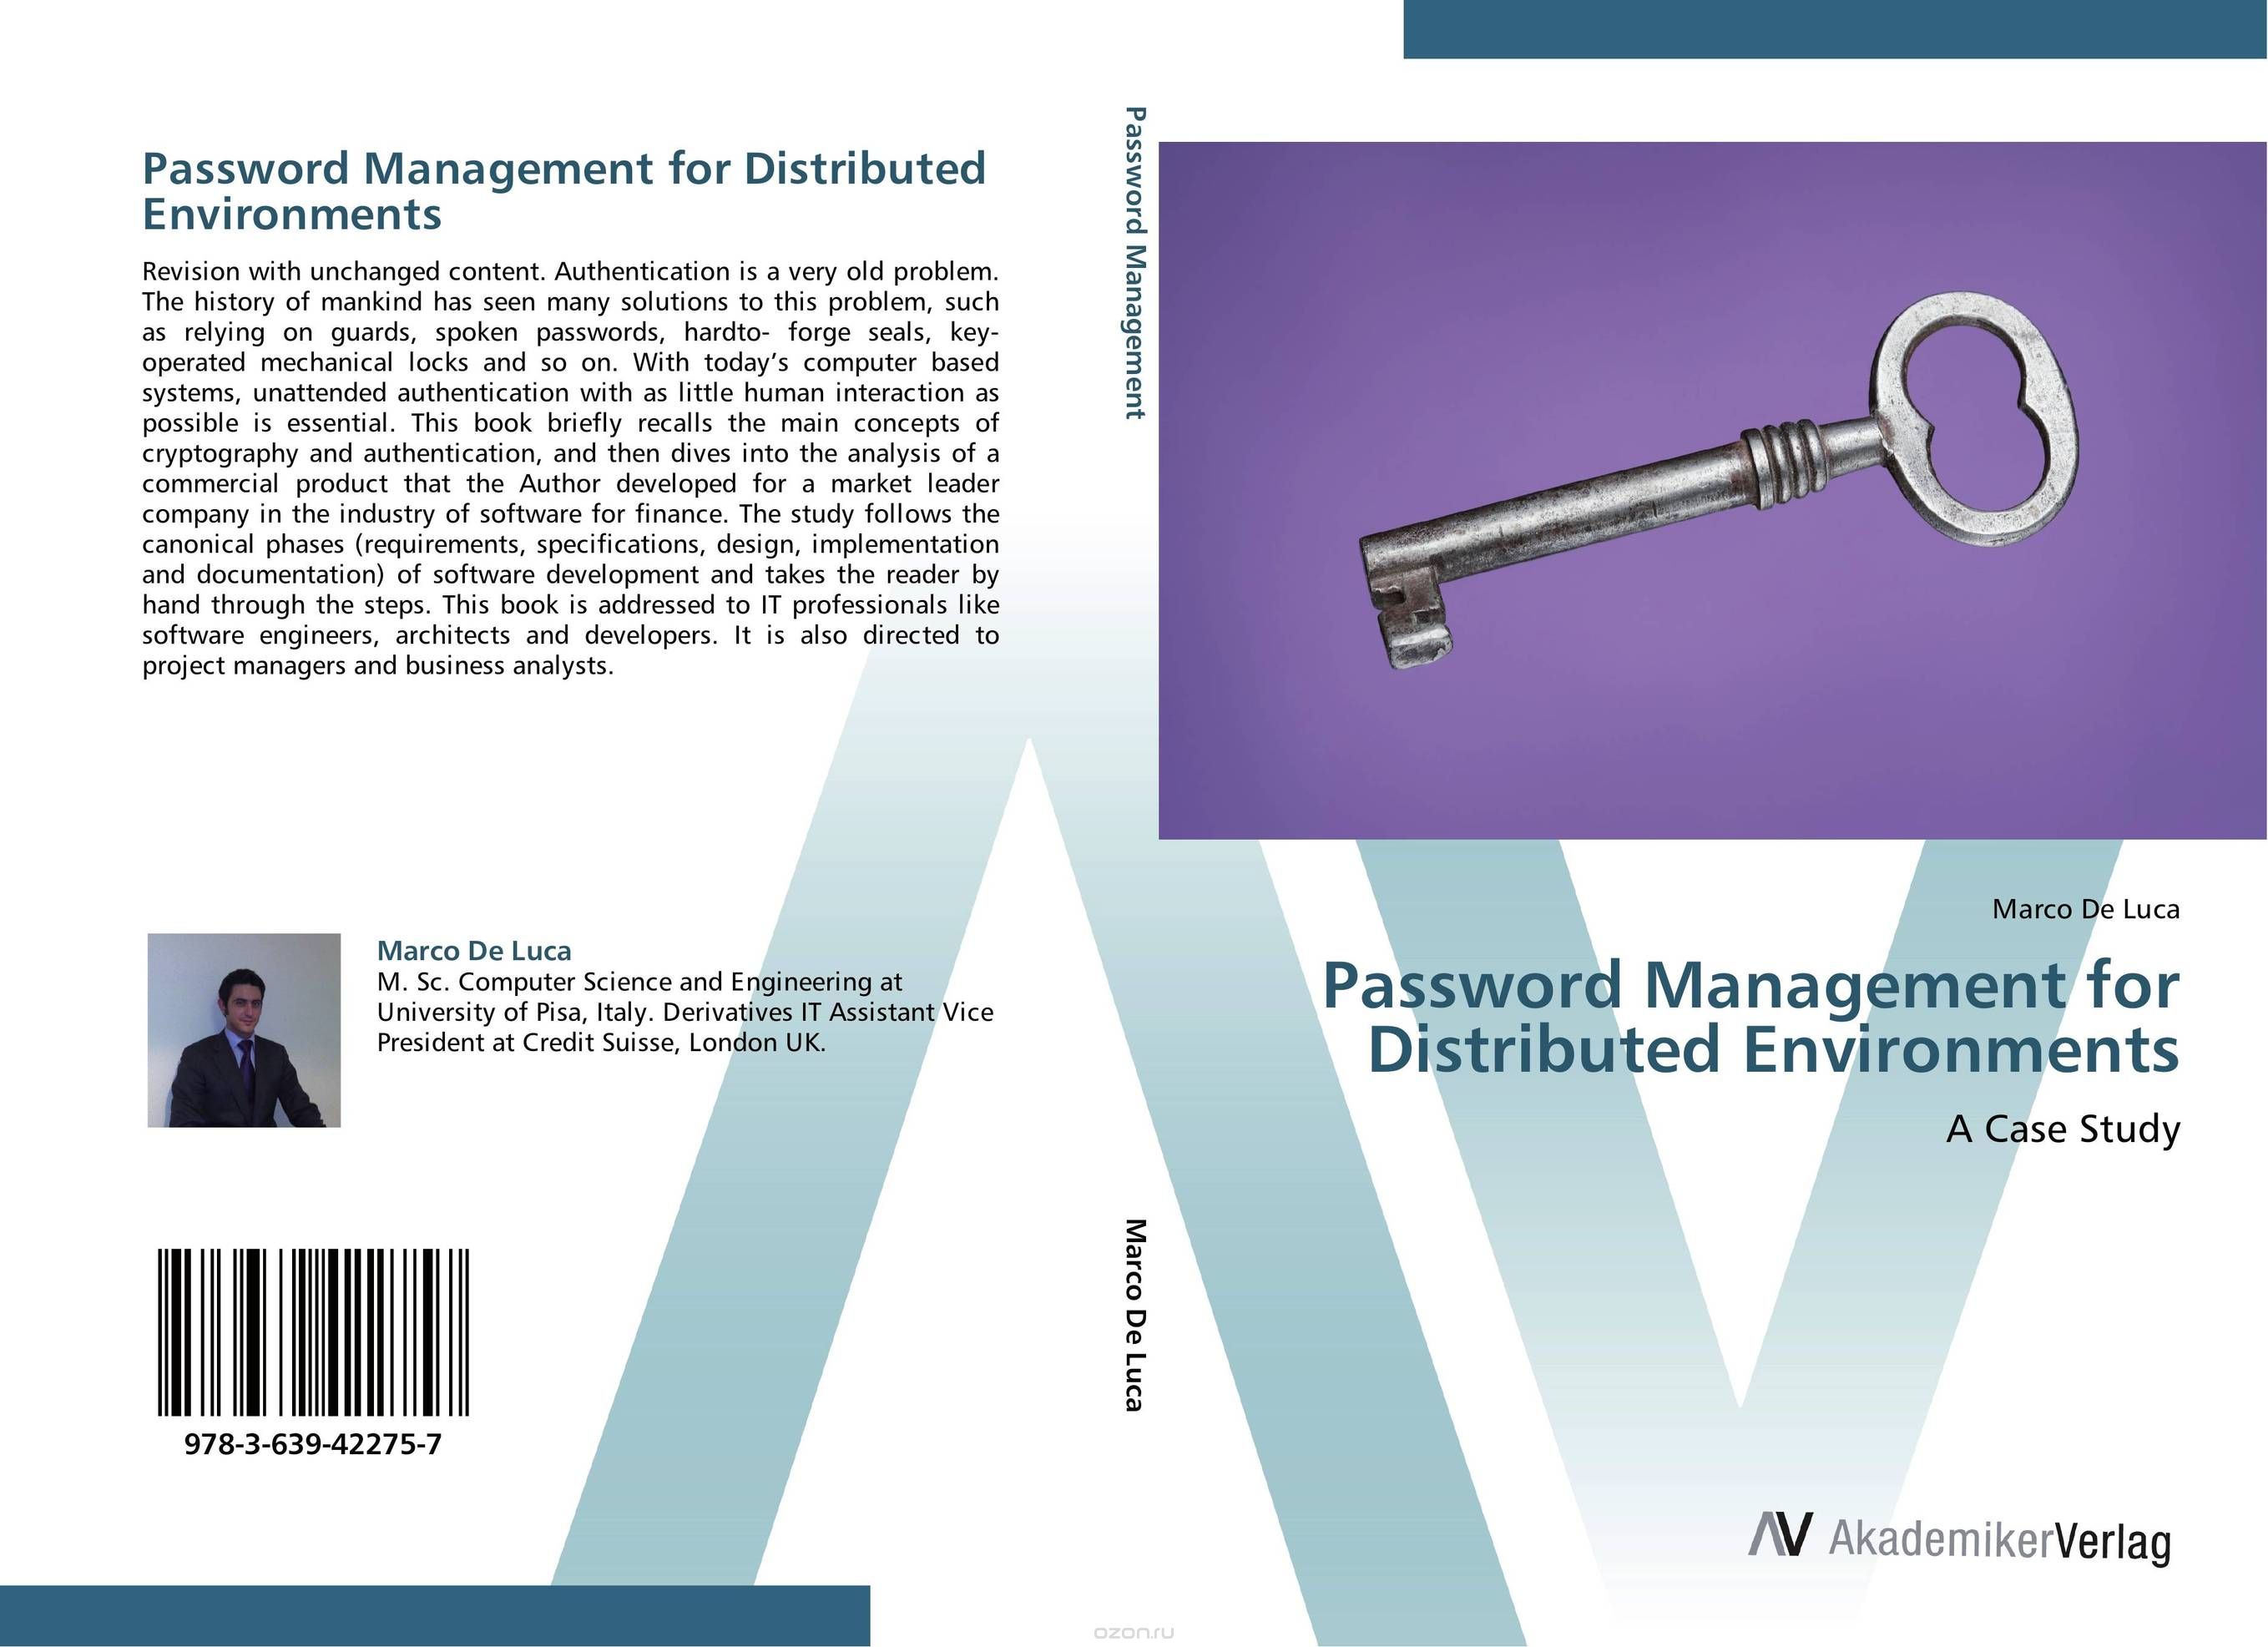 Скачать книгу "Password Management for Distributed Environments"